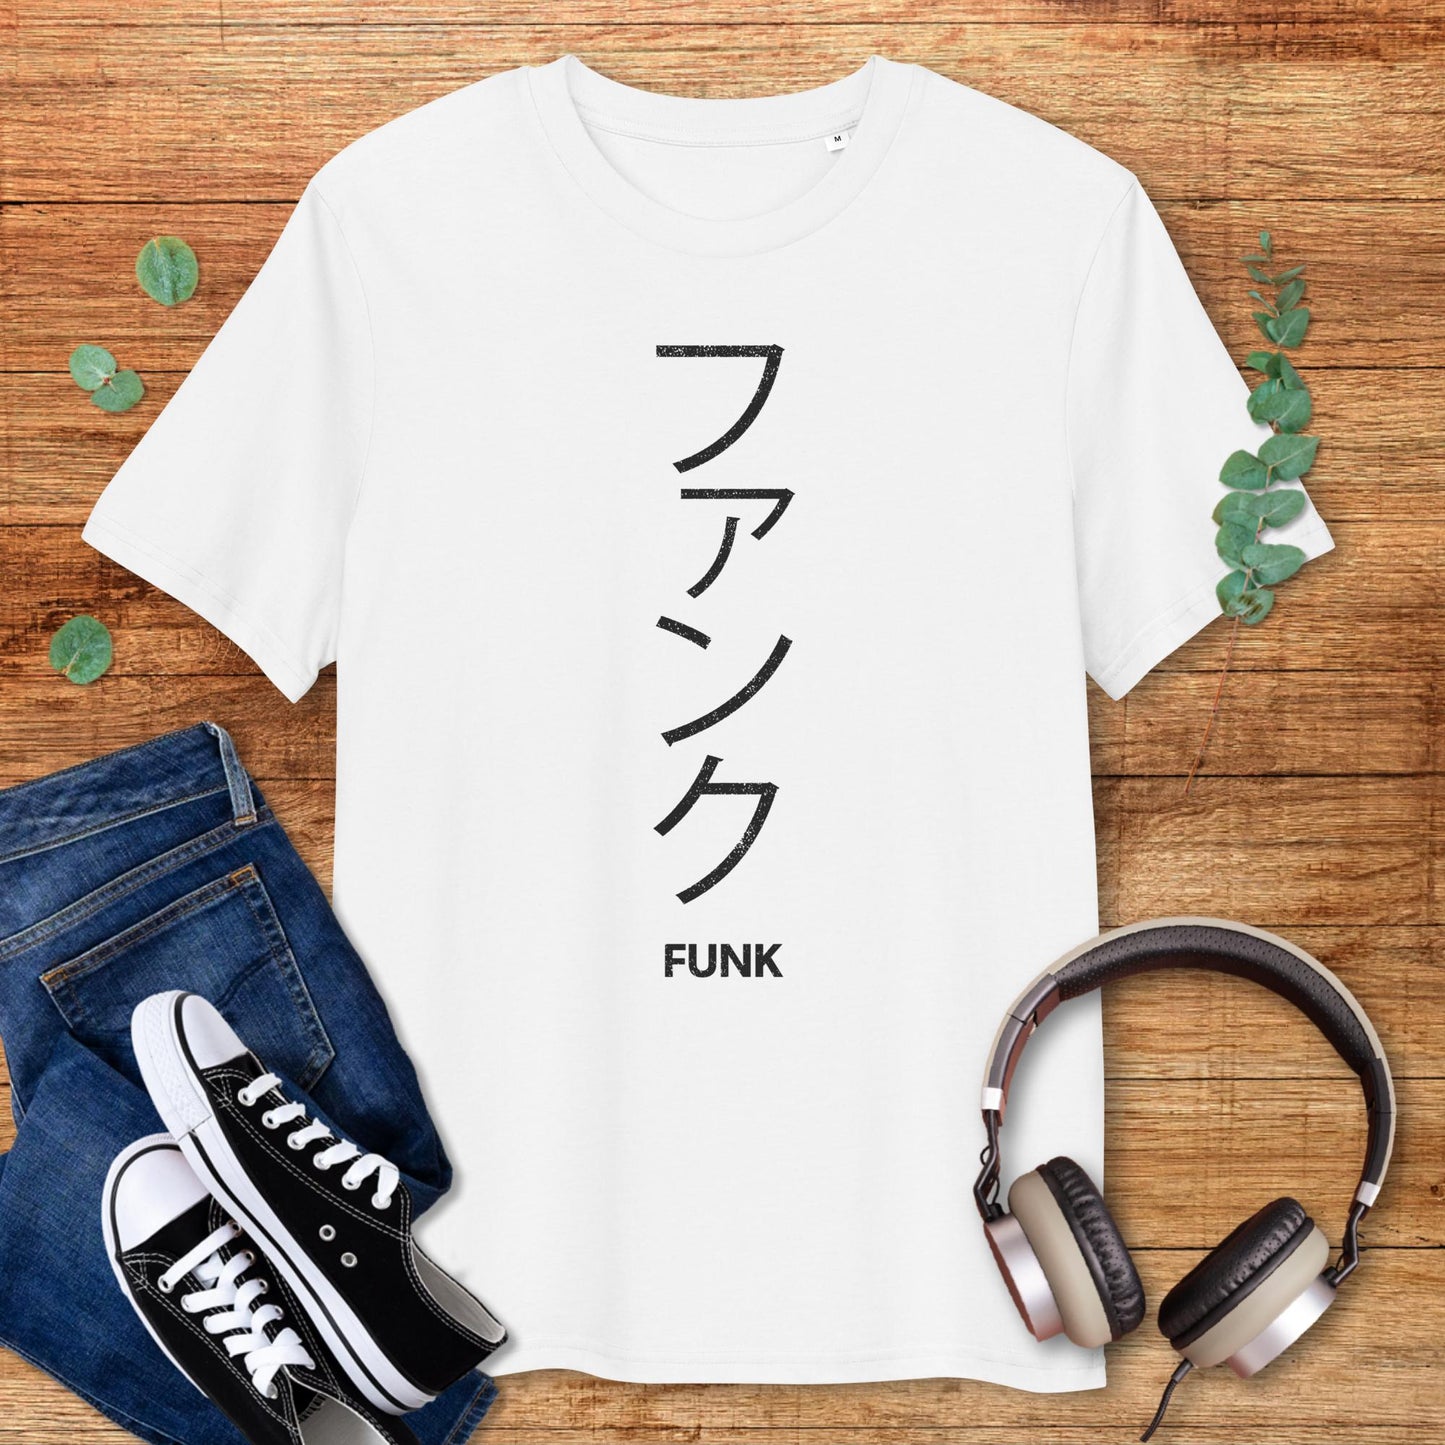 Funk in Japanese